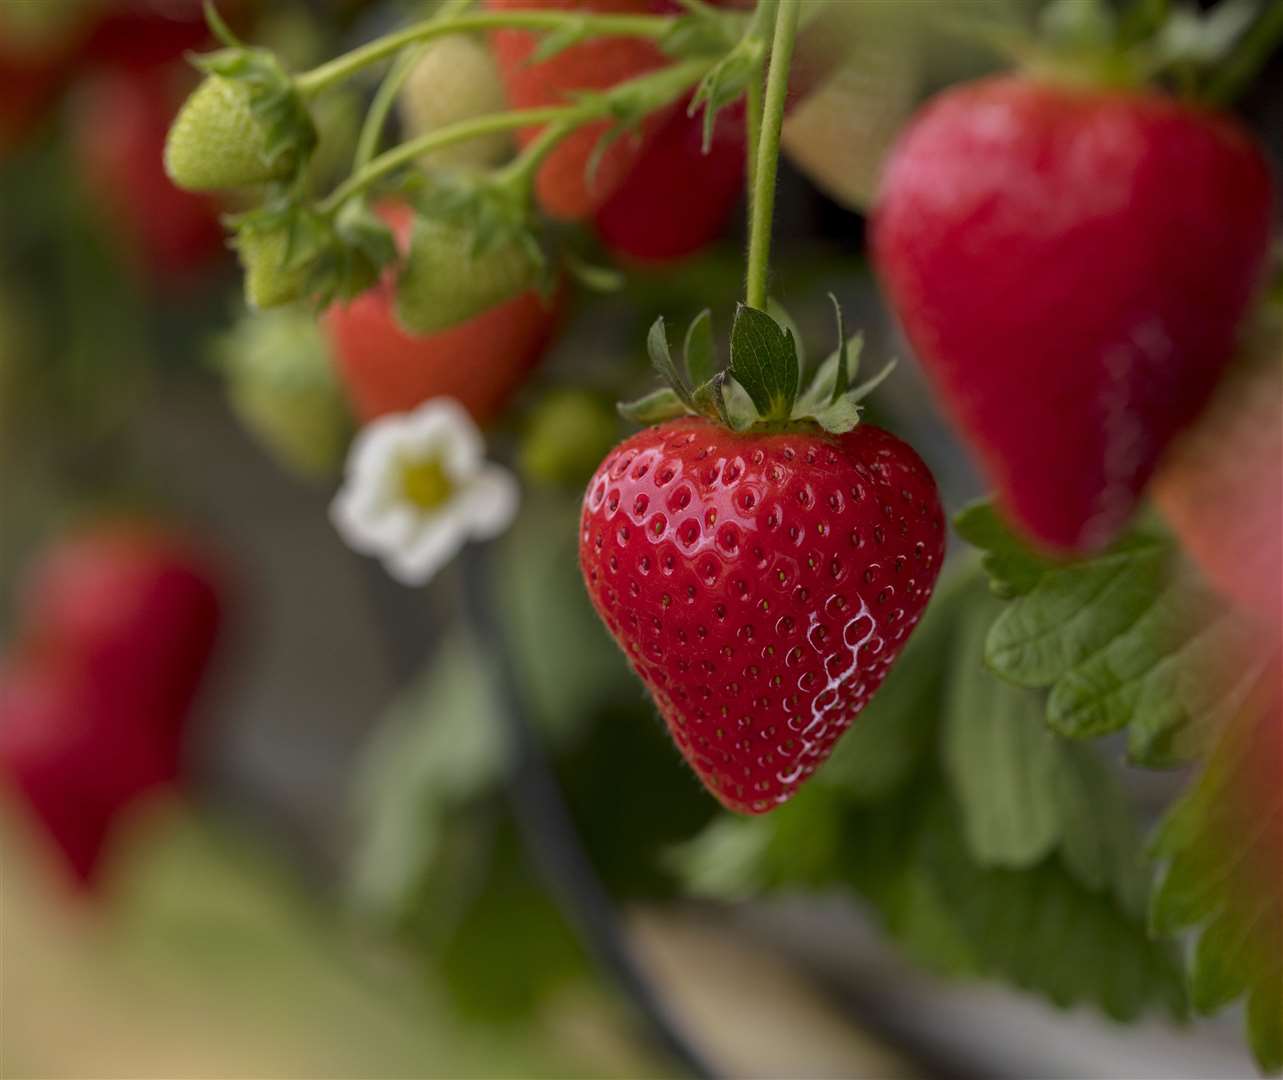 Strawberry season runs from April until November in the UK